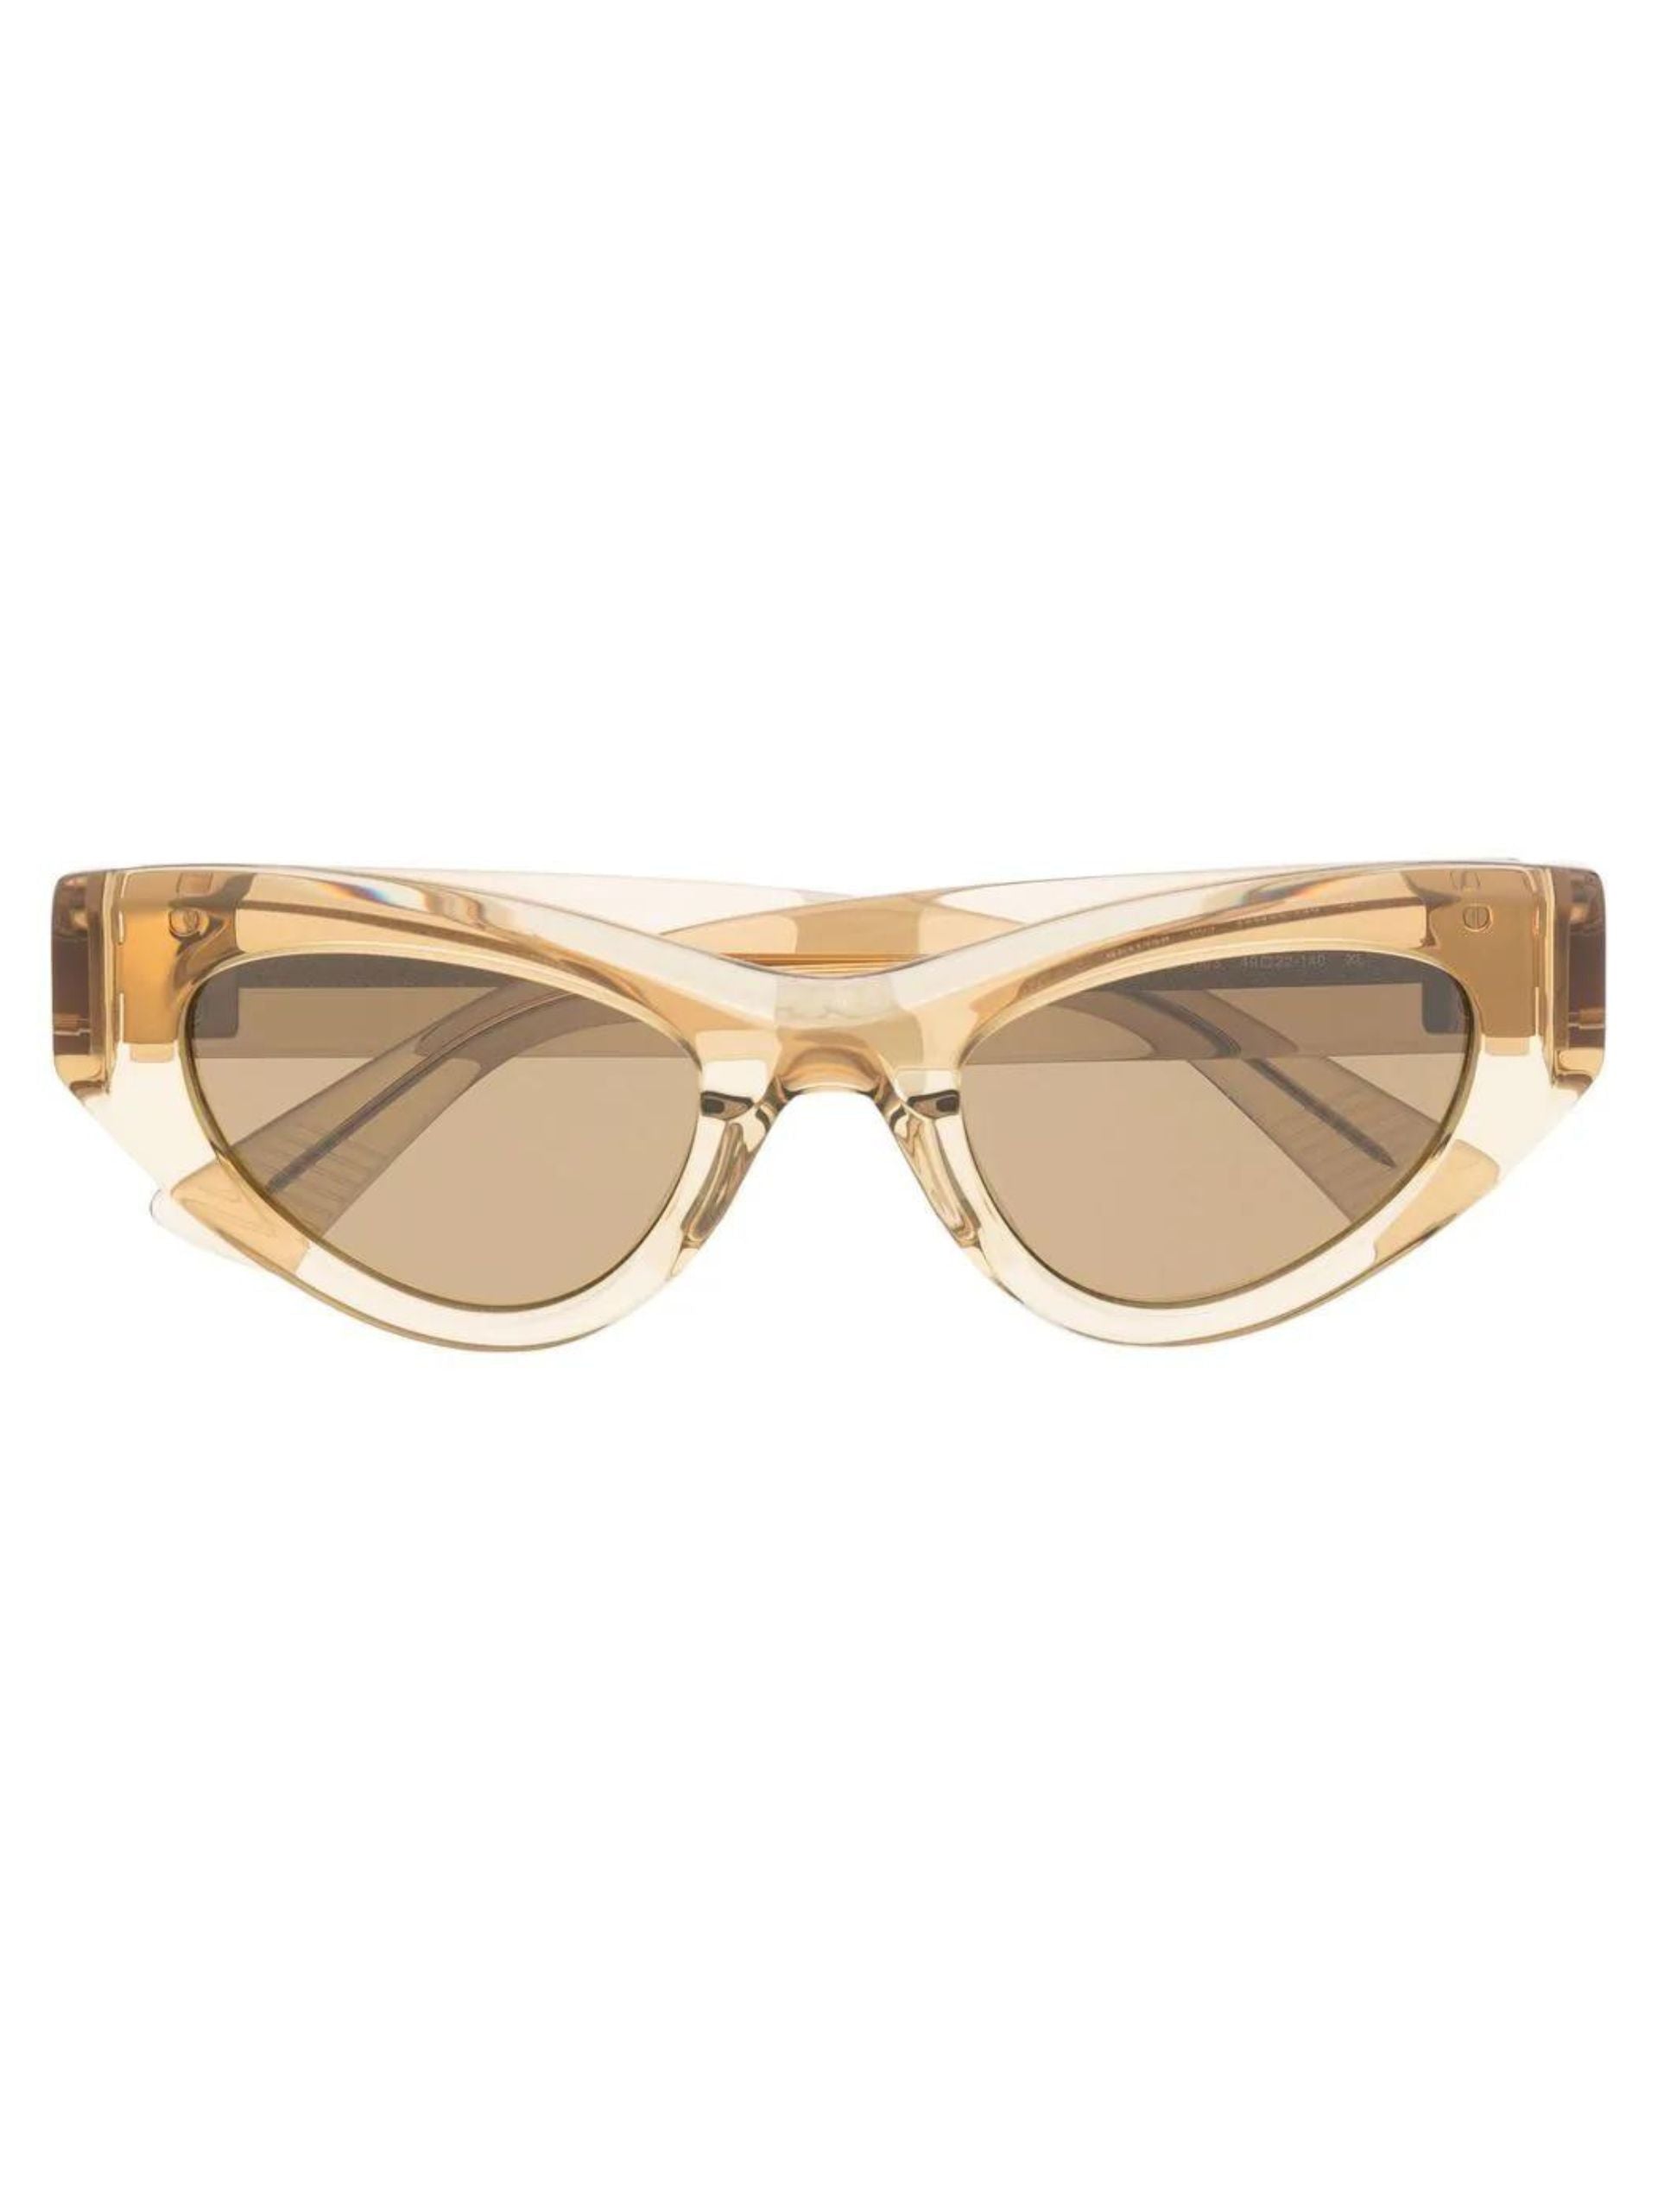 Turn Cat Eye Sunglasses in Brown - Bottega Veneta